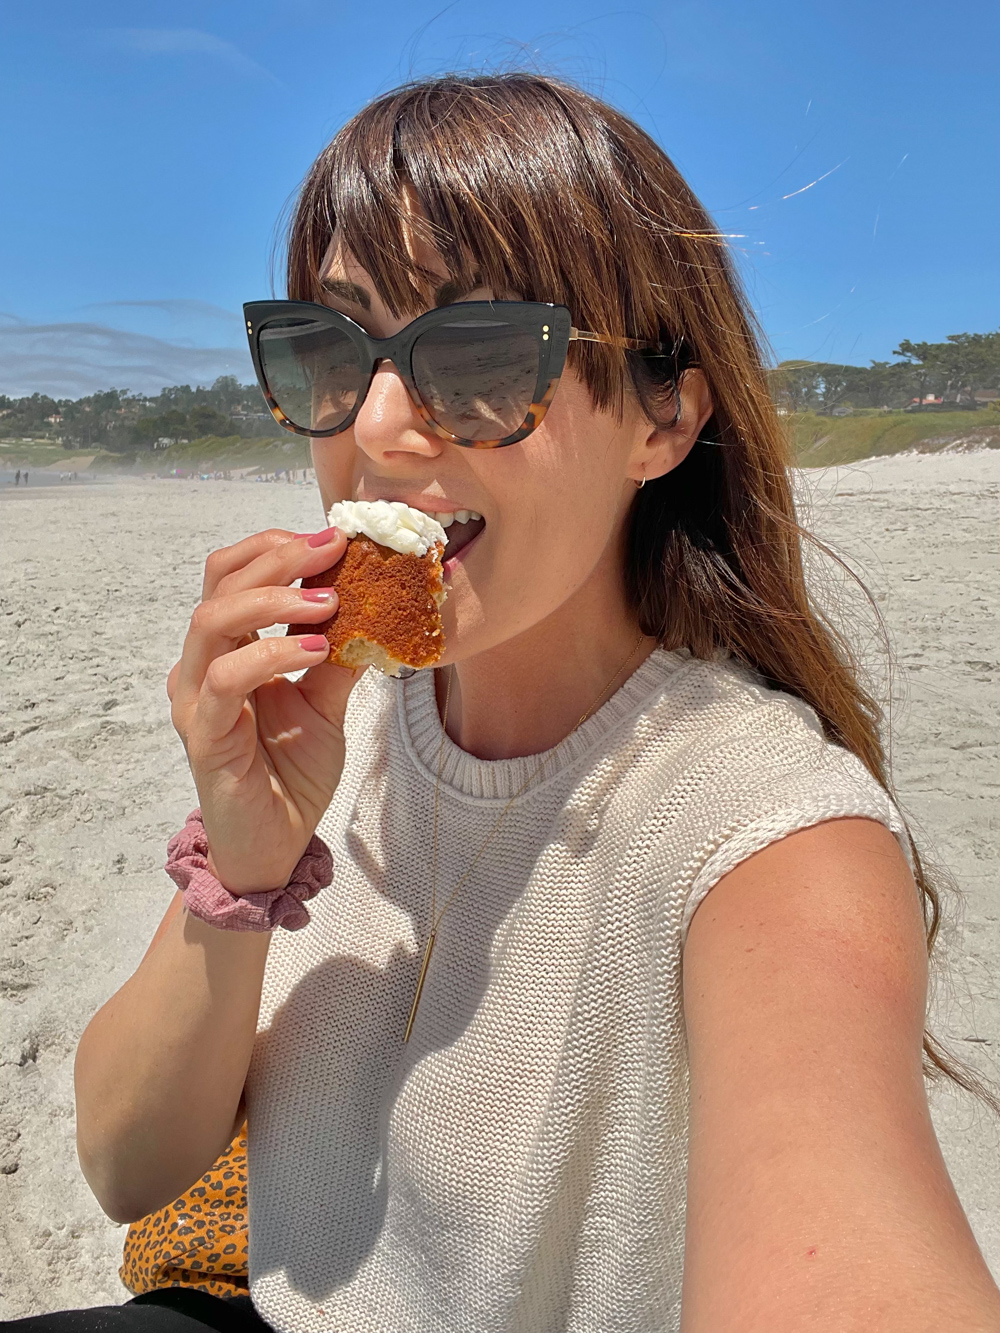 Becky enjoying an Artichoke Cupcake in Carmel